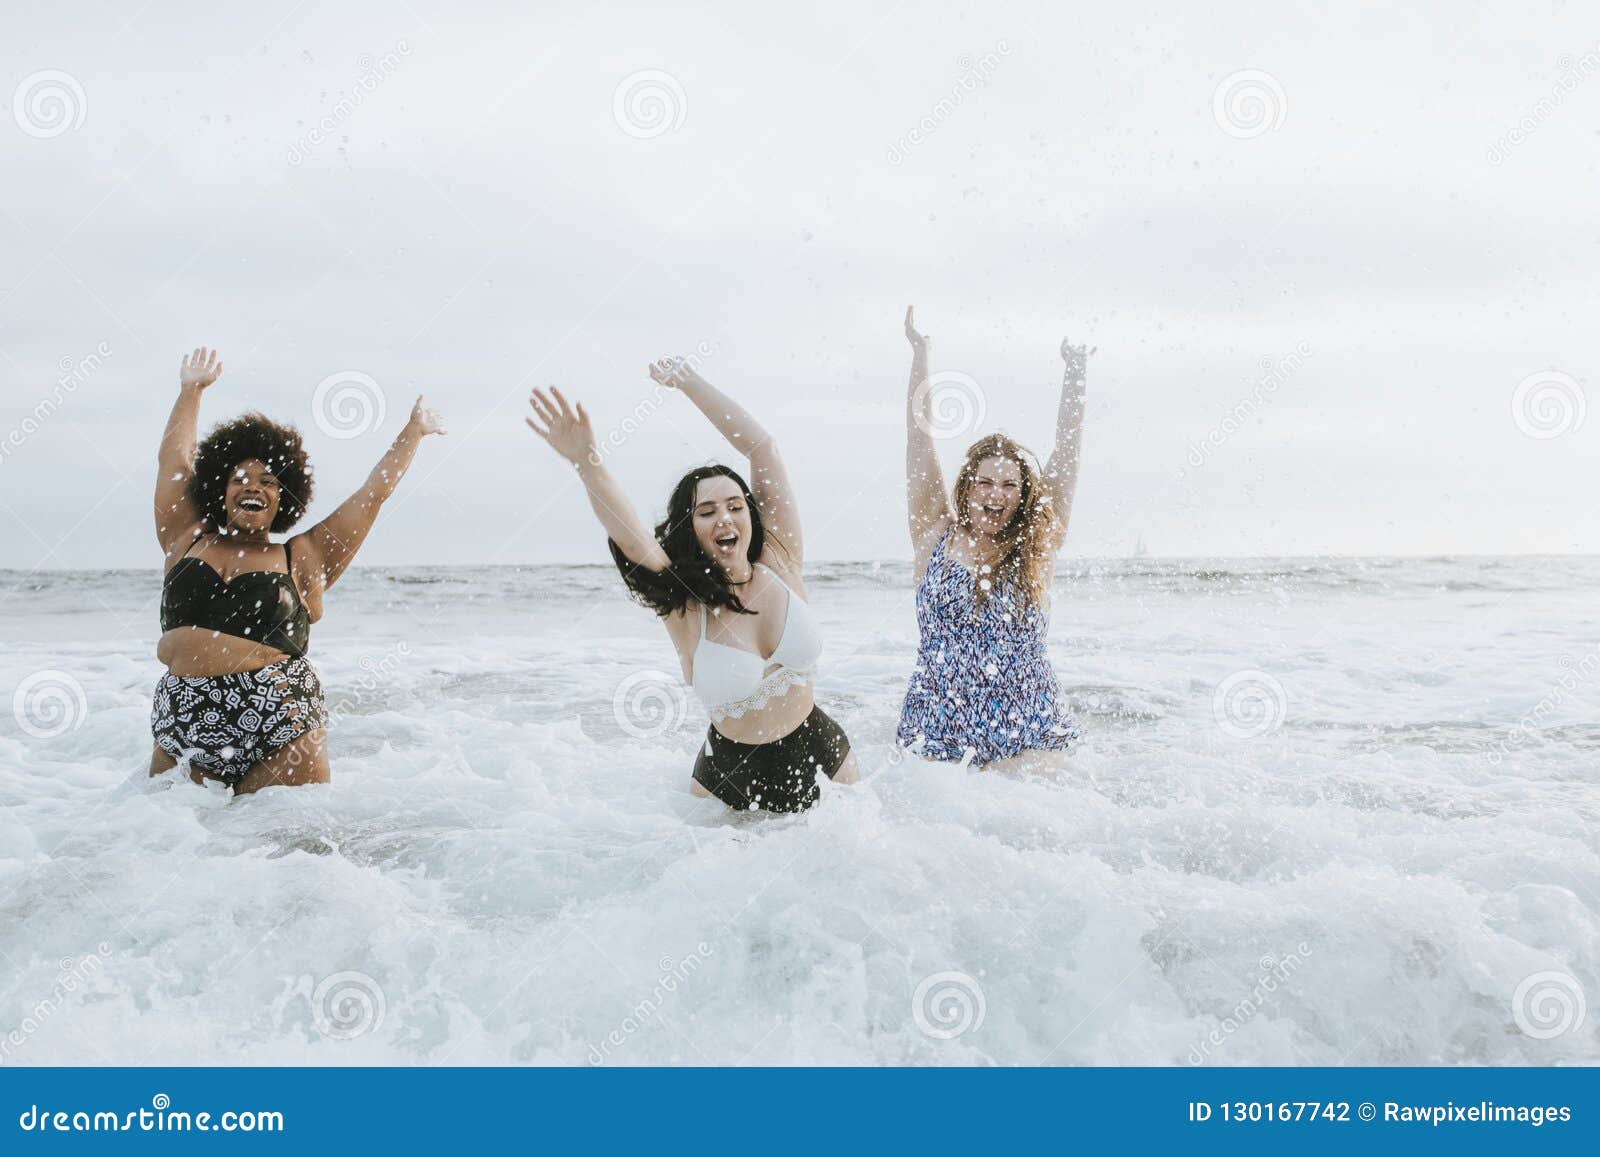 diverse plus size women having fun in the water